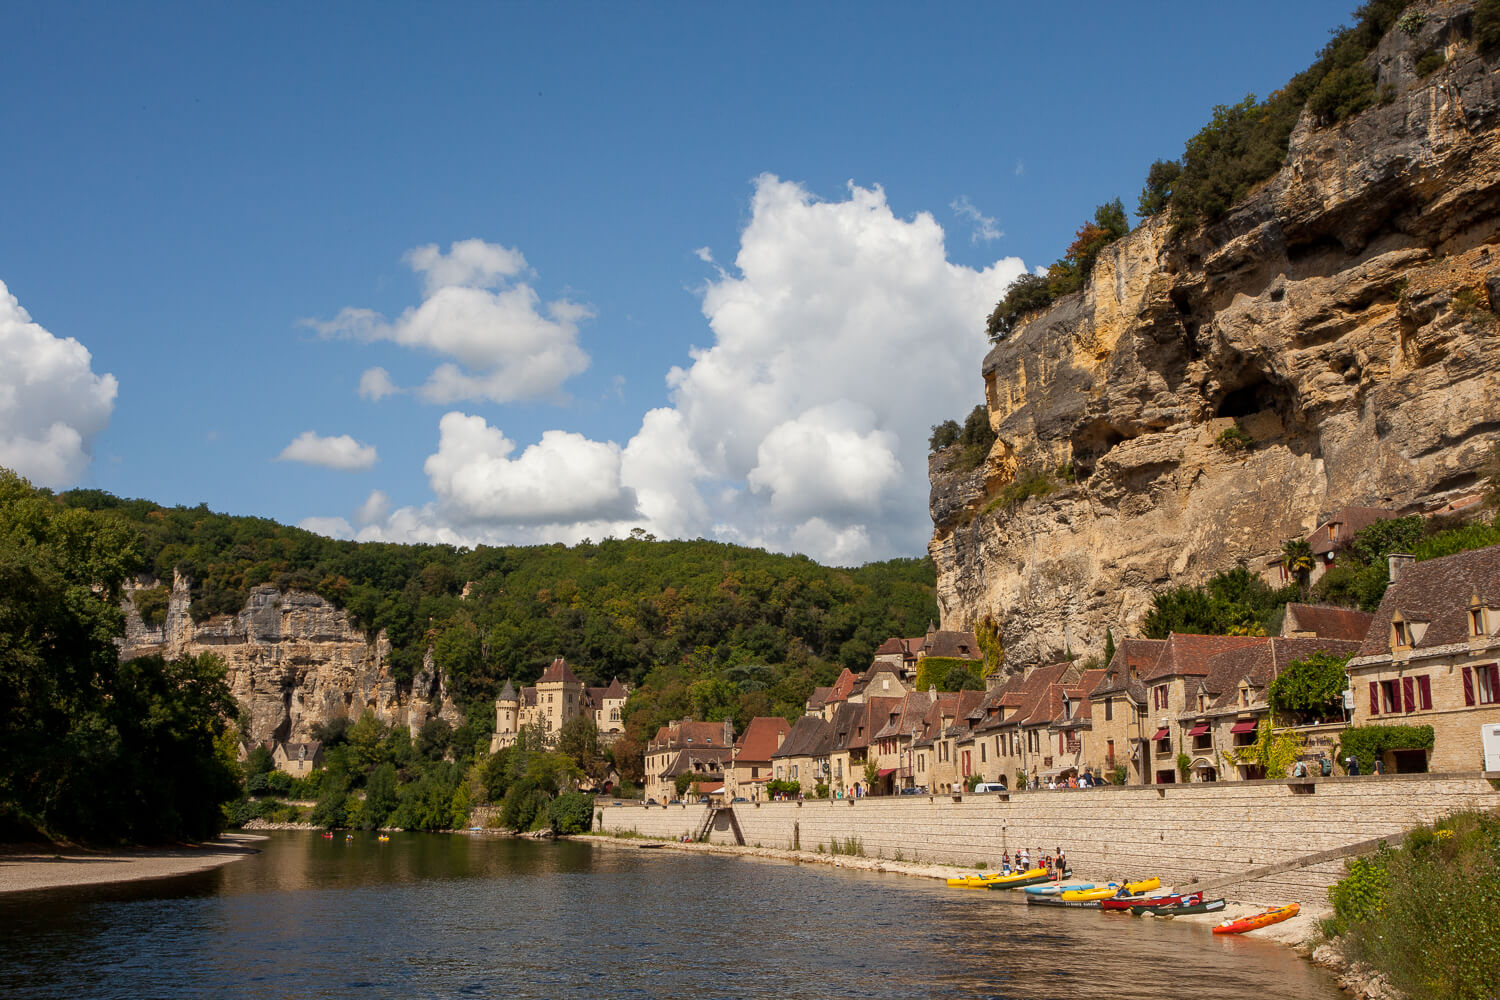 View of La Roque de Gageac from the Dordogne River